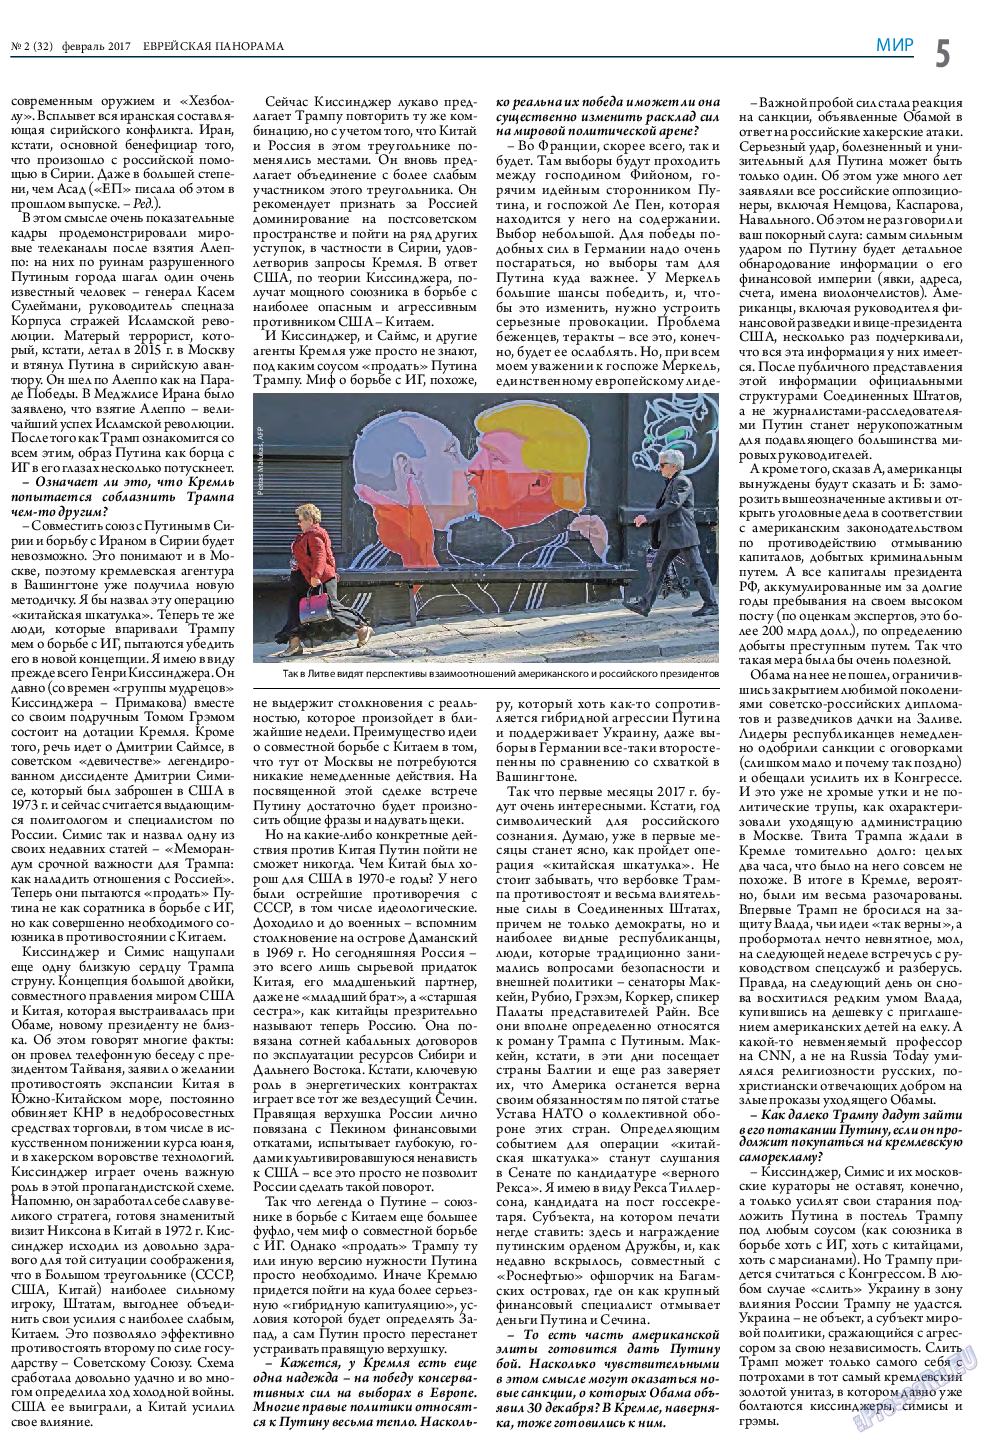 Еврейская панорама, газета. 2017 №2 стр.5